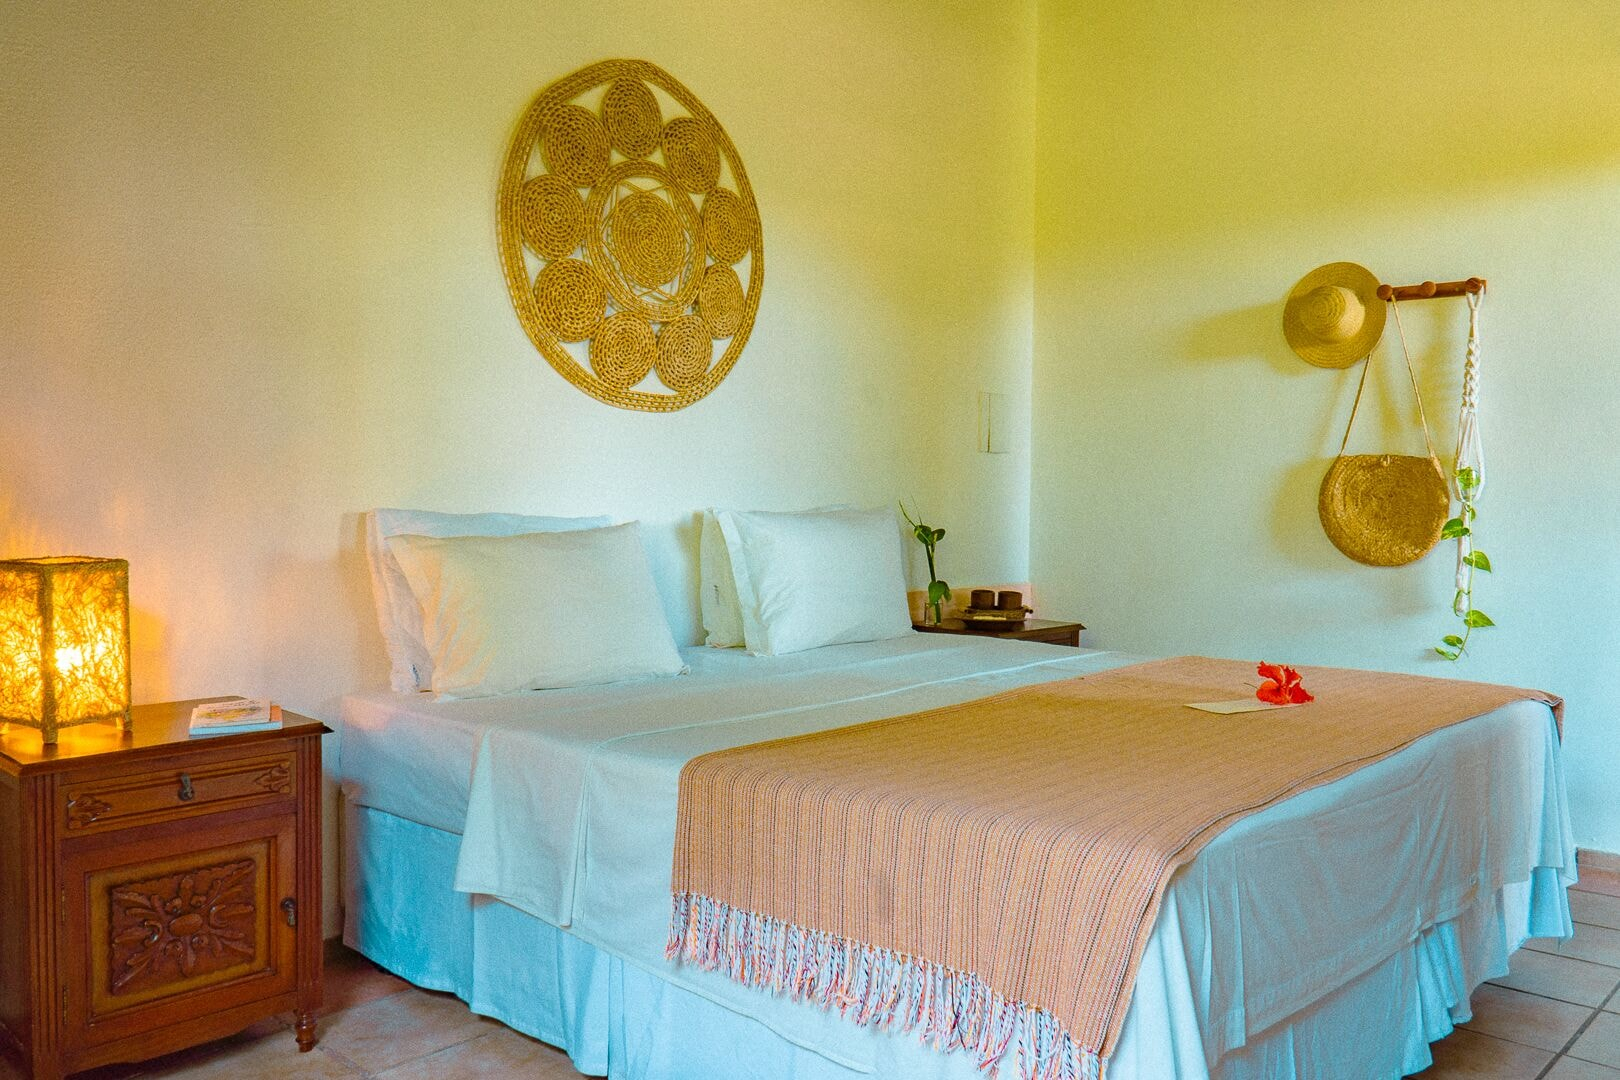 Bedroom 3, Pousada Sossego, Tibau do Sul